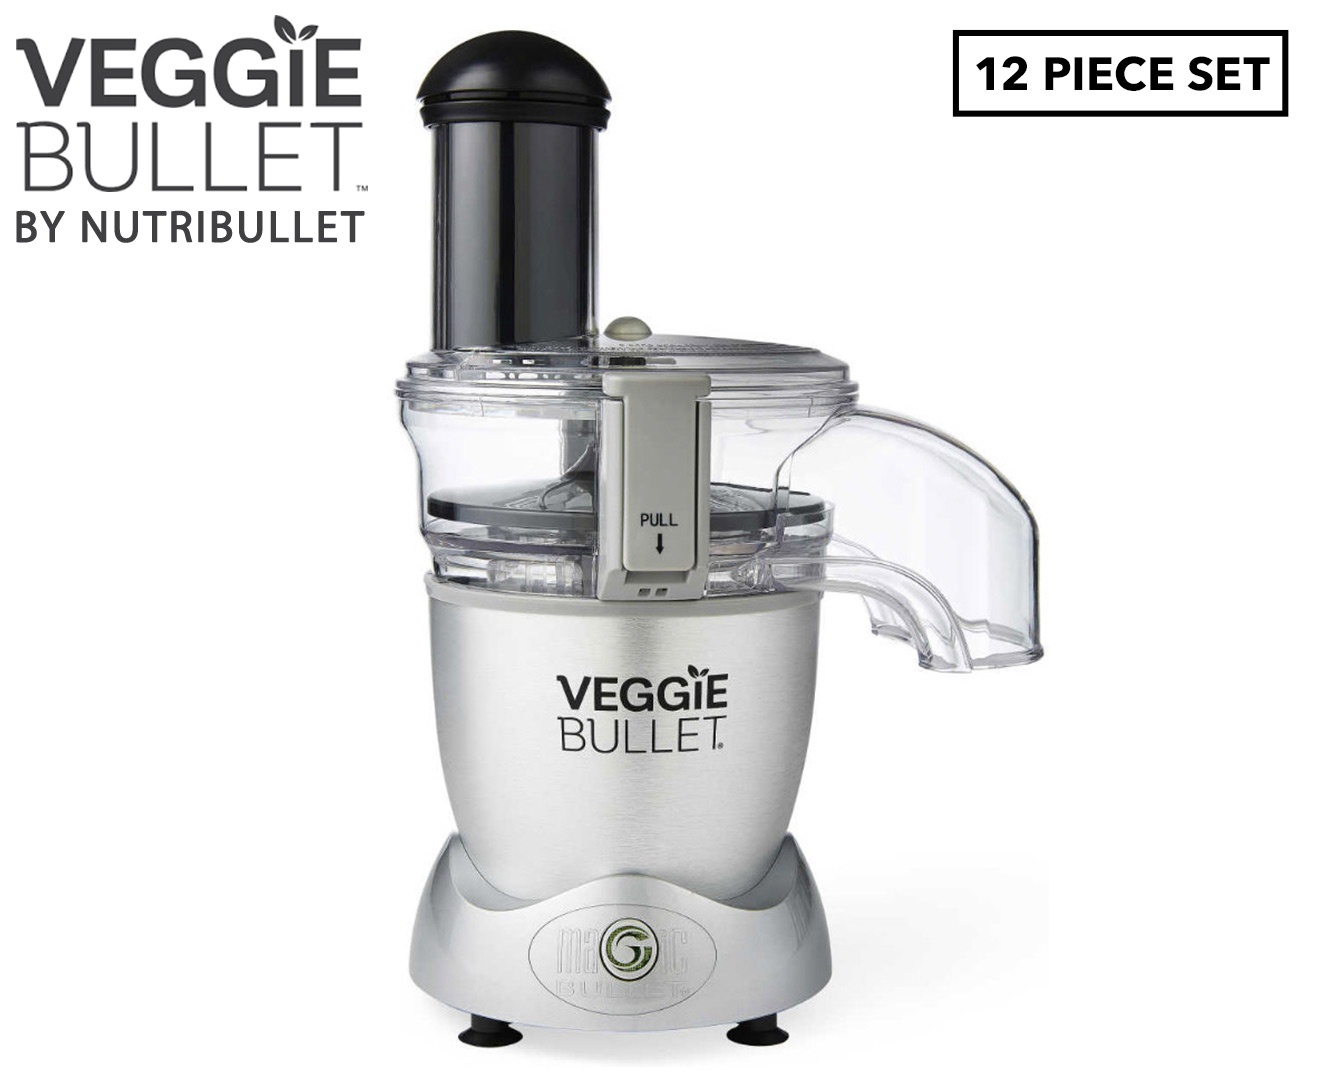 Veggie Bullet Electric Spiralizer & Food Processor, Silver - Bed